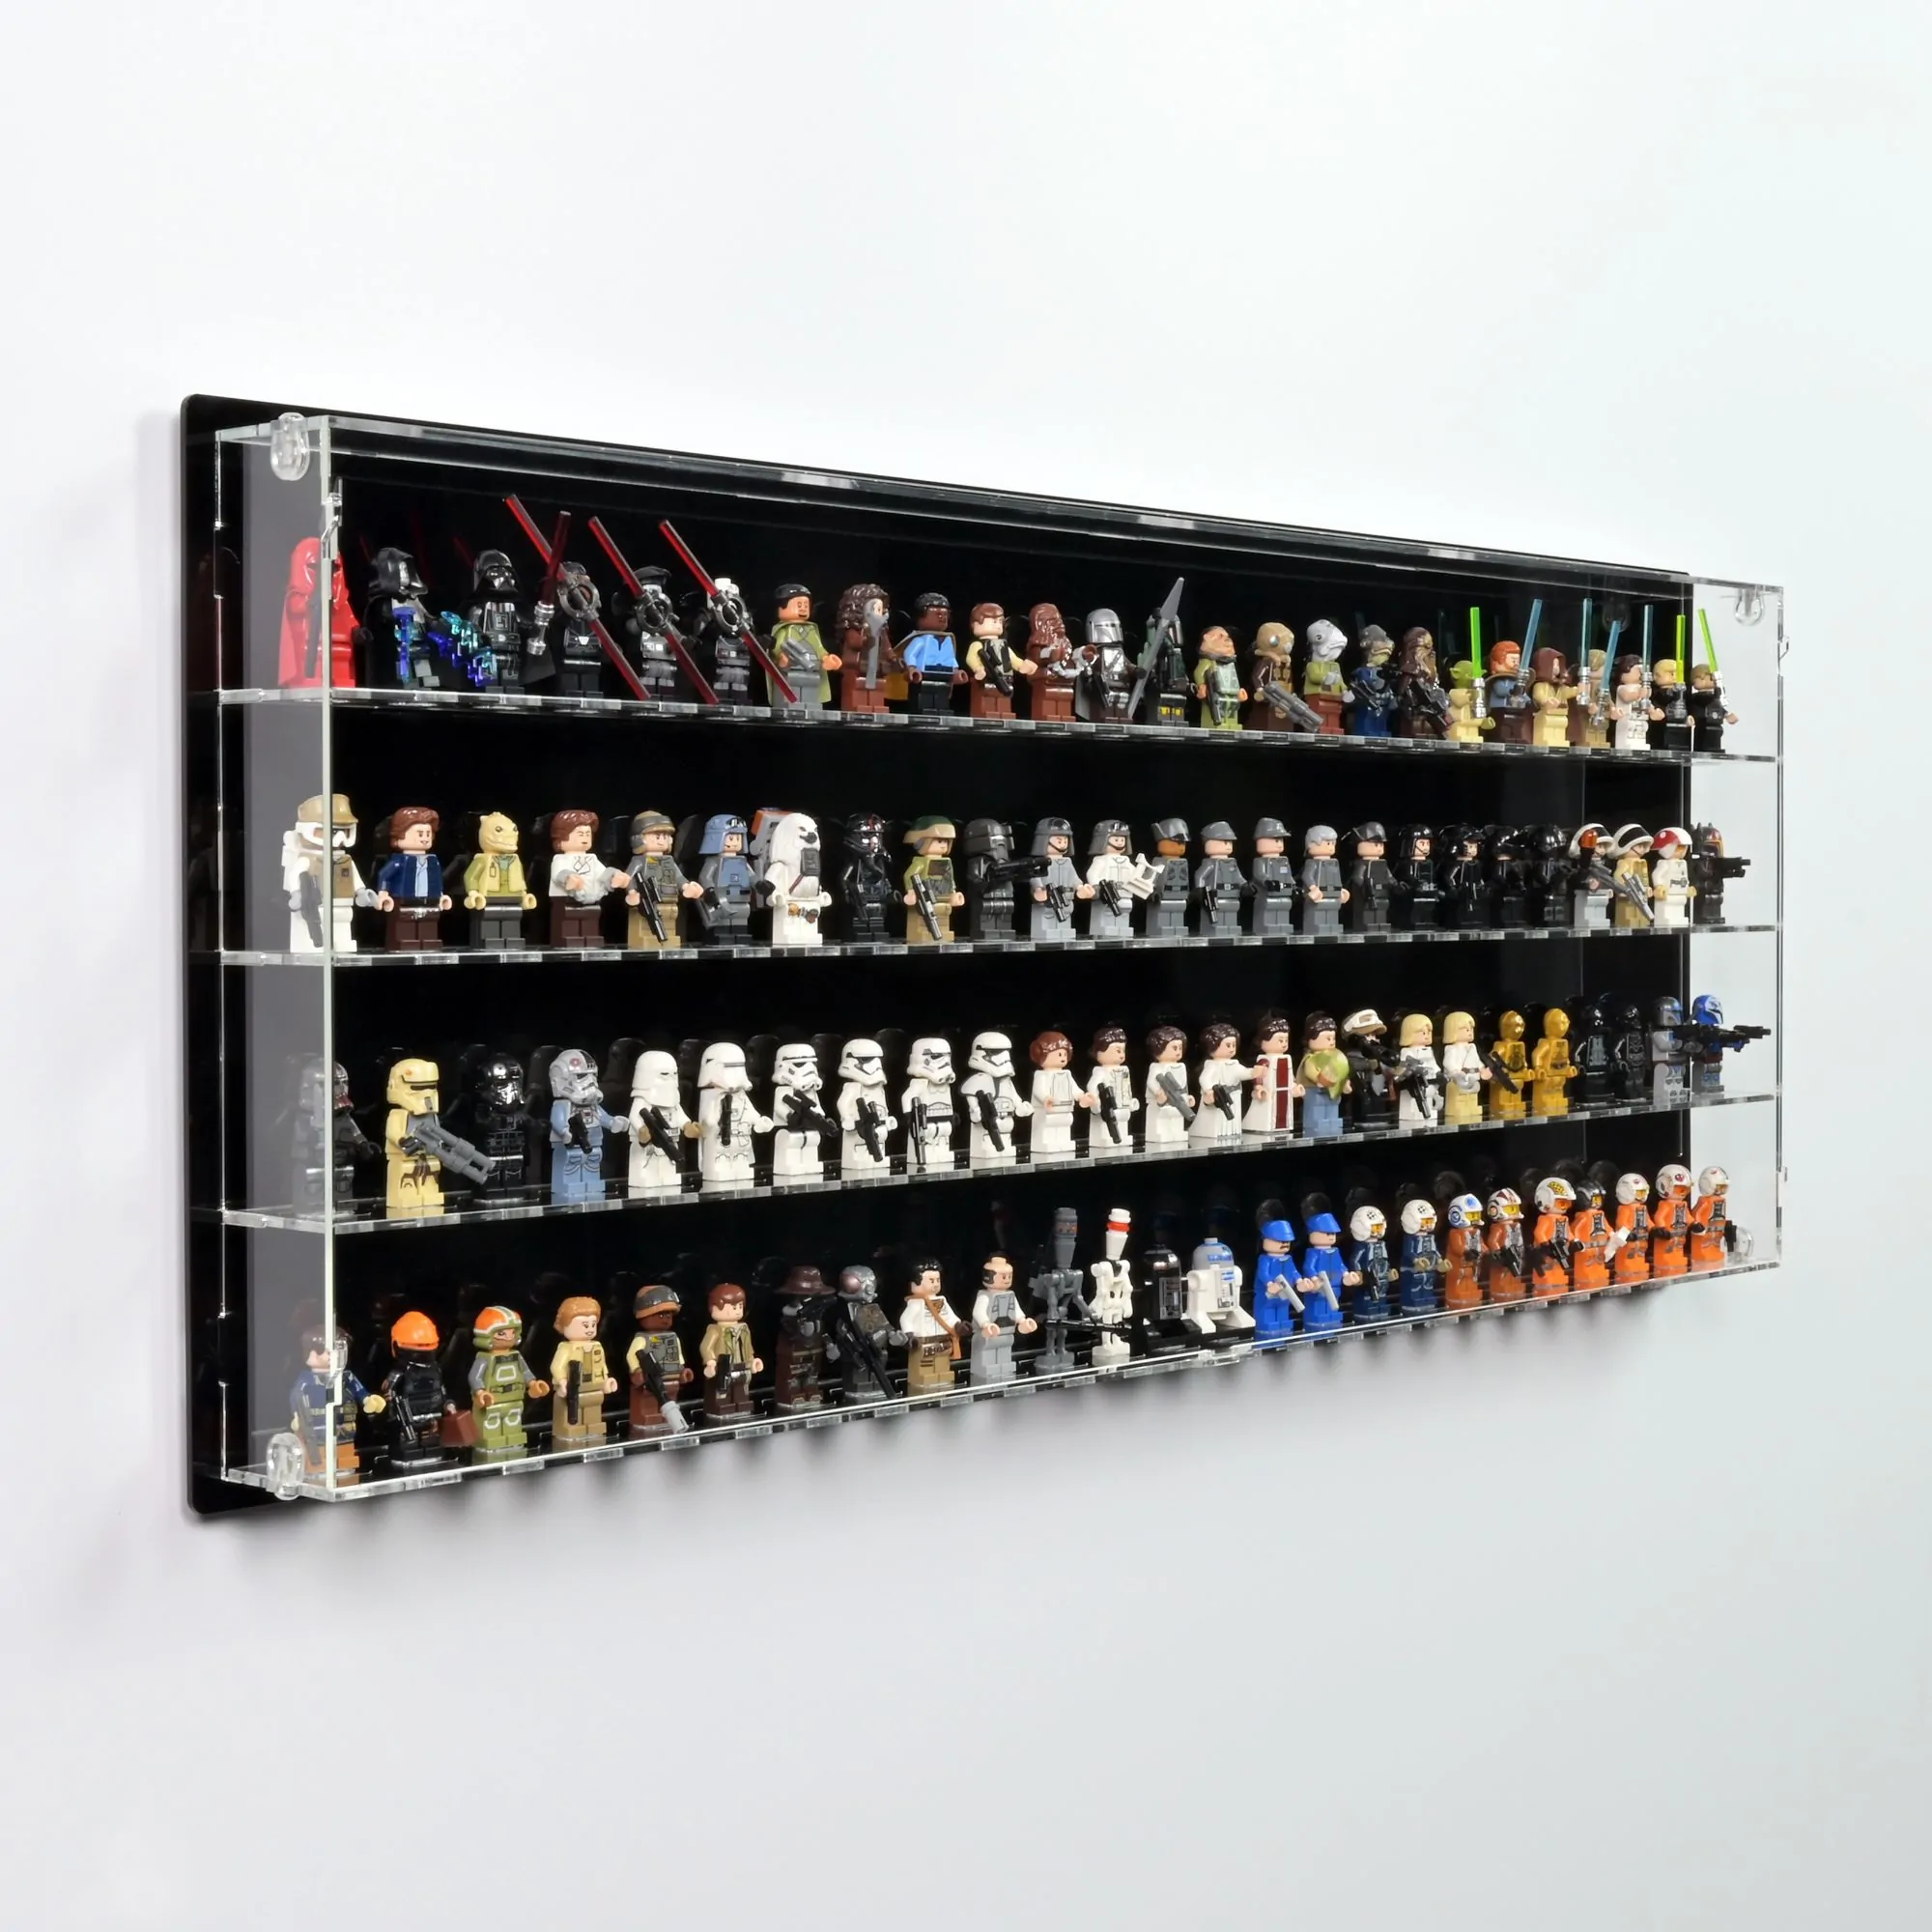 100 LEGO Minifigures Wall Cabinet iDisplayit